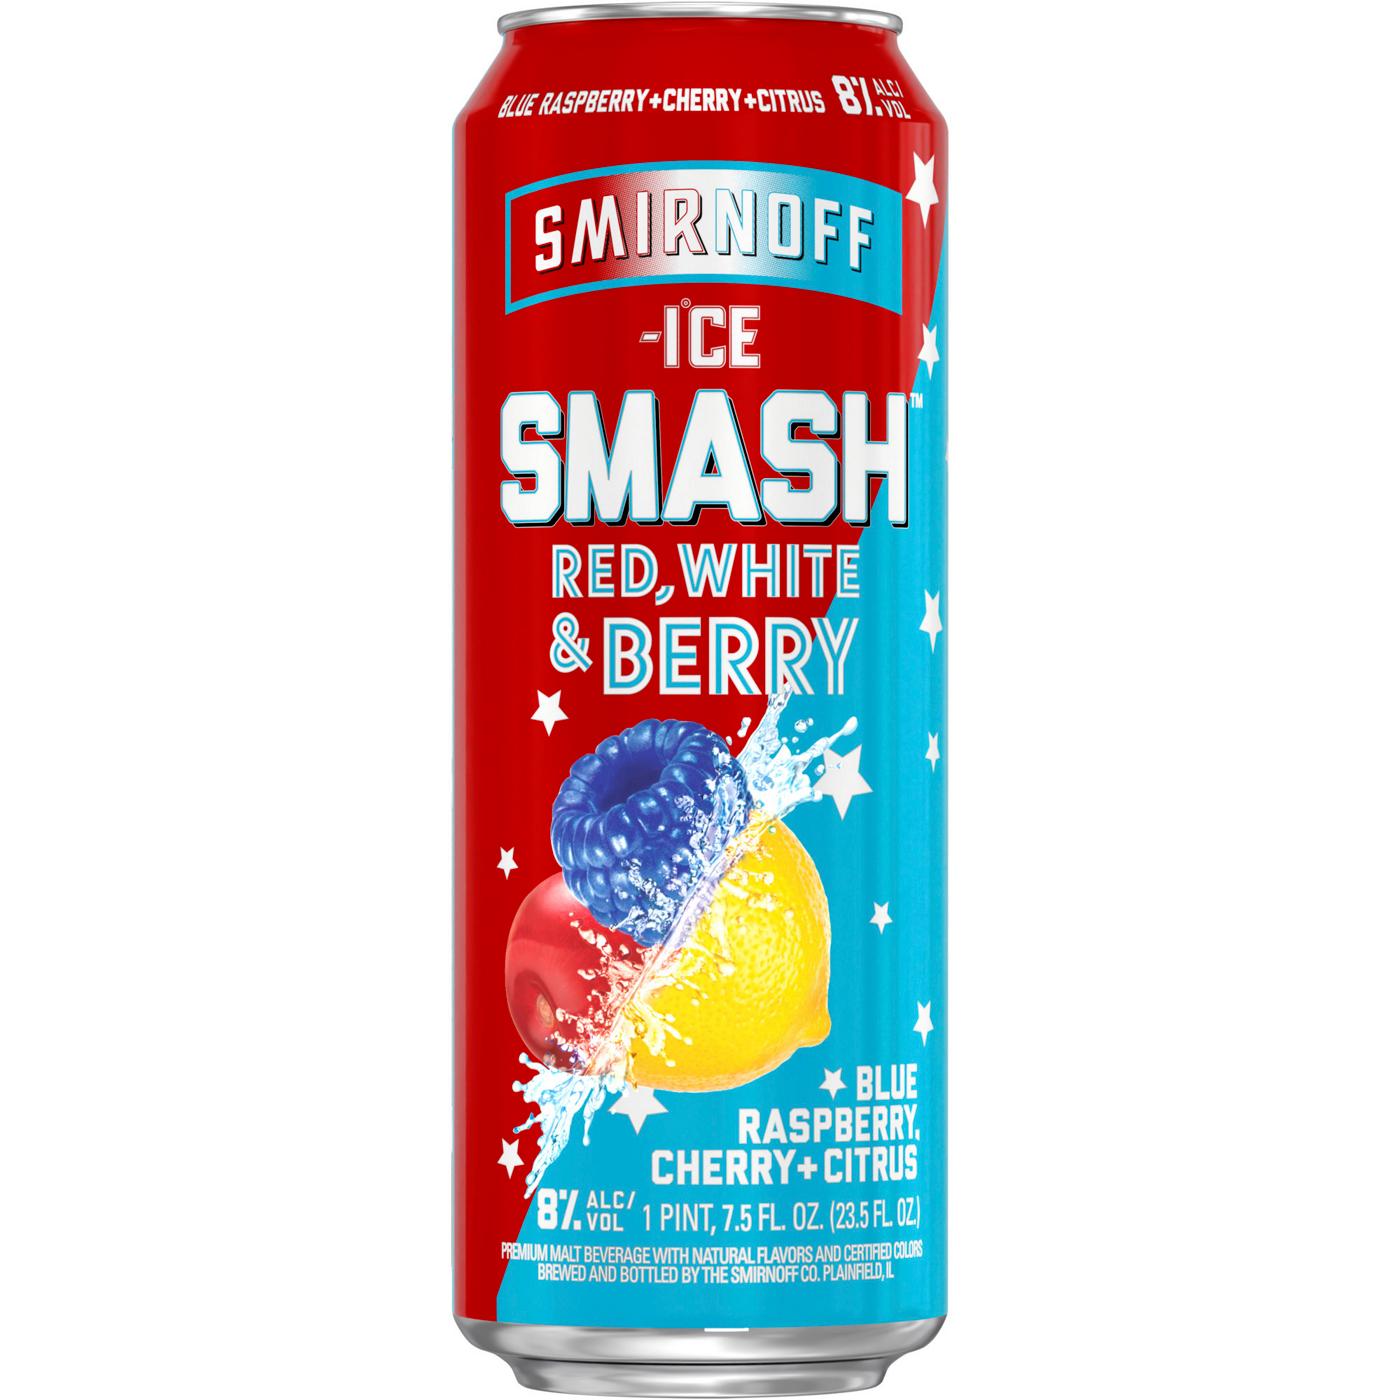 Smirnoff Ice Smash Red, White, Berry; image 1 of 3